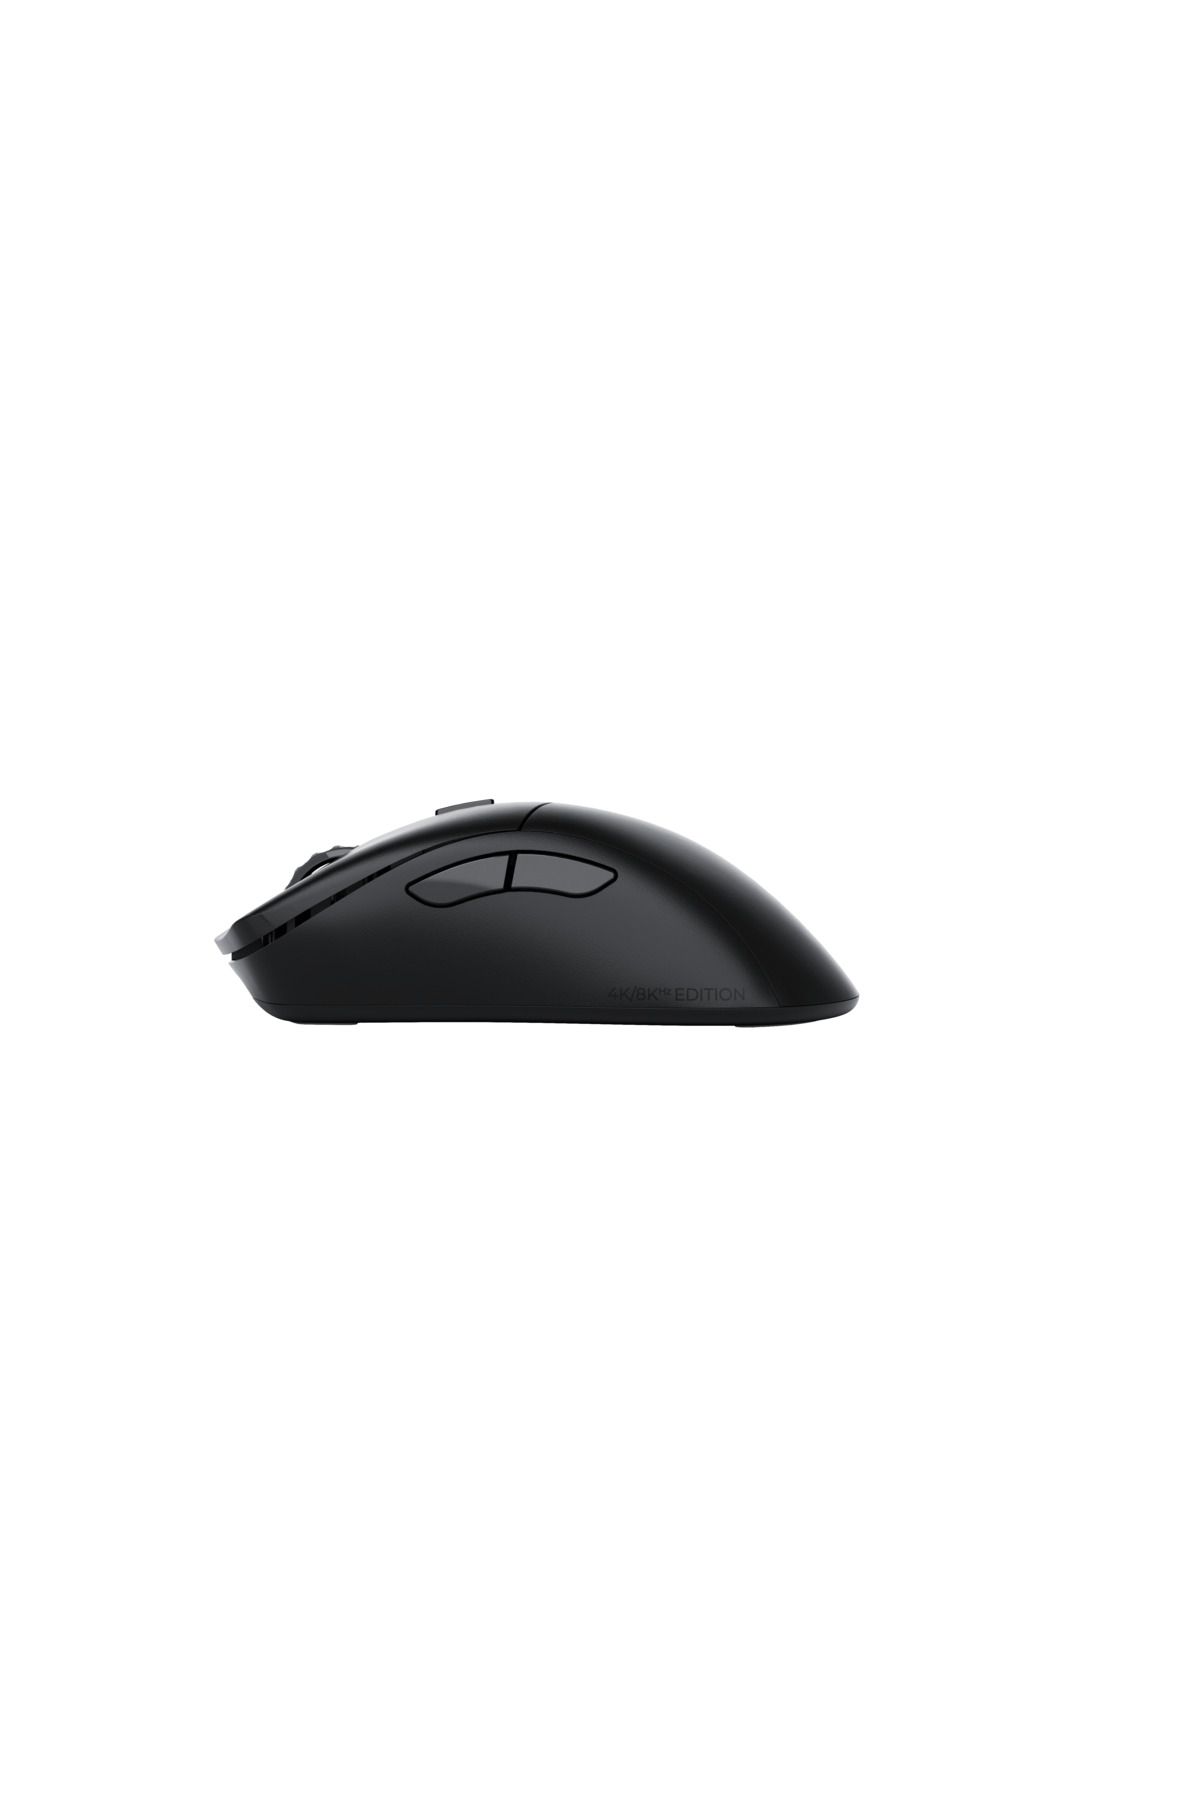 Glorious Model D 2 PRO 4K/8K Polling Kablosuz RGB Oyuncu Mouse Siyah